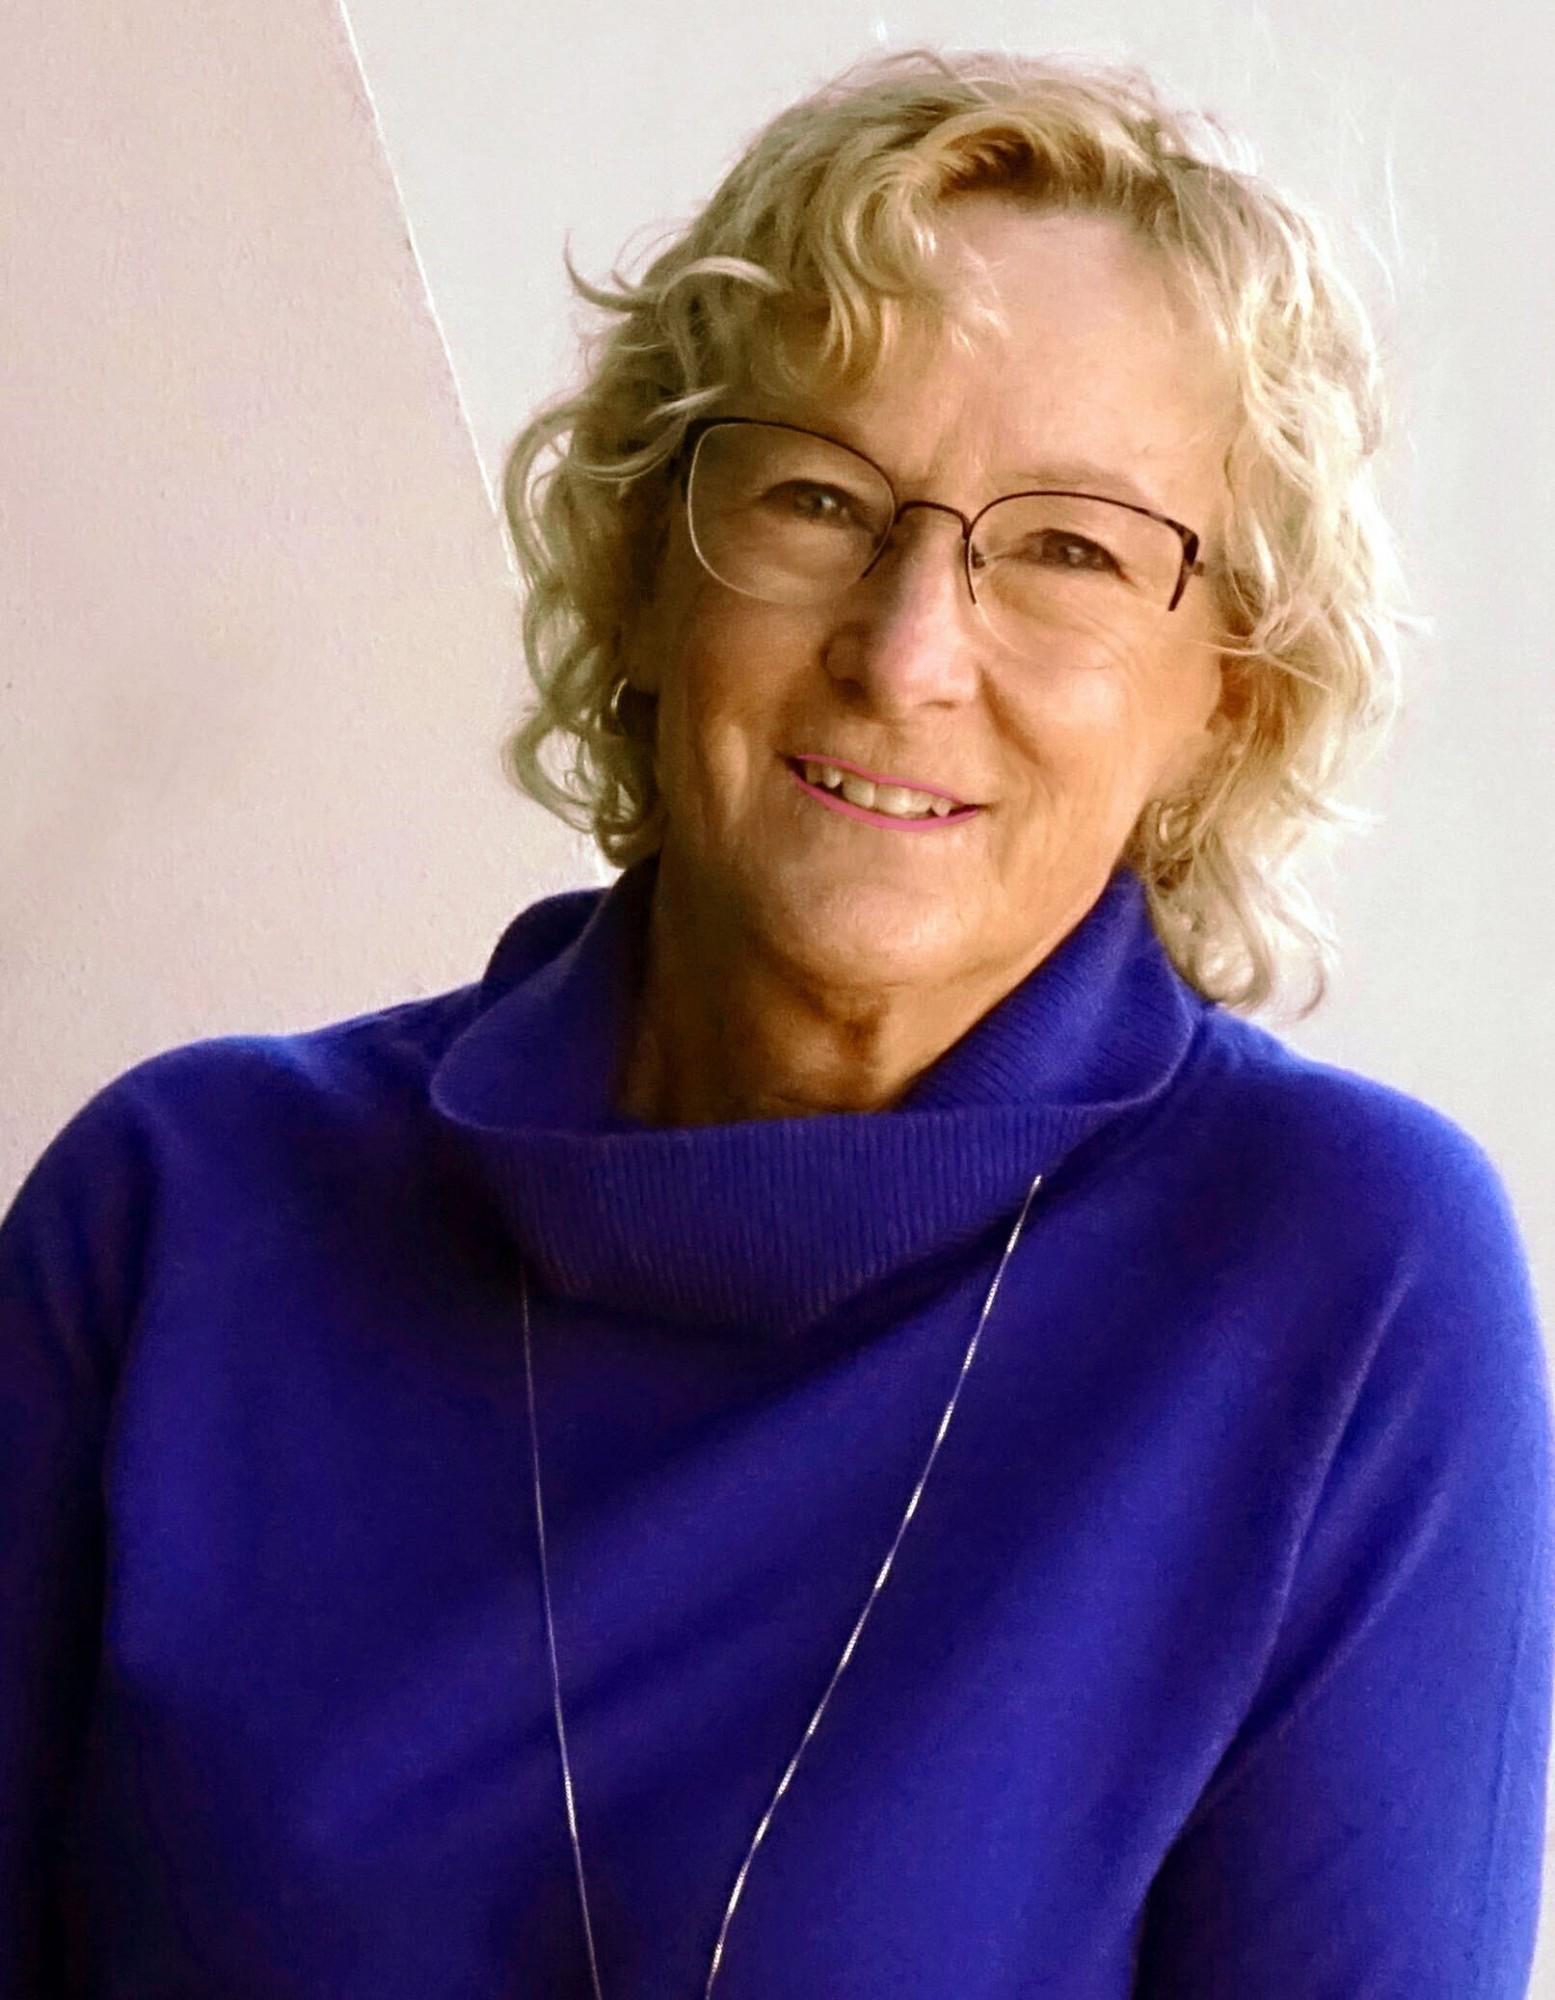 Author Shannon Baker